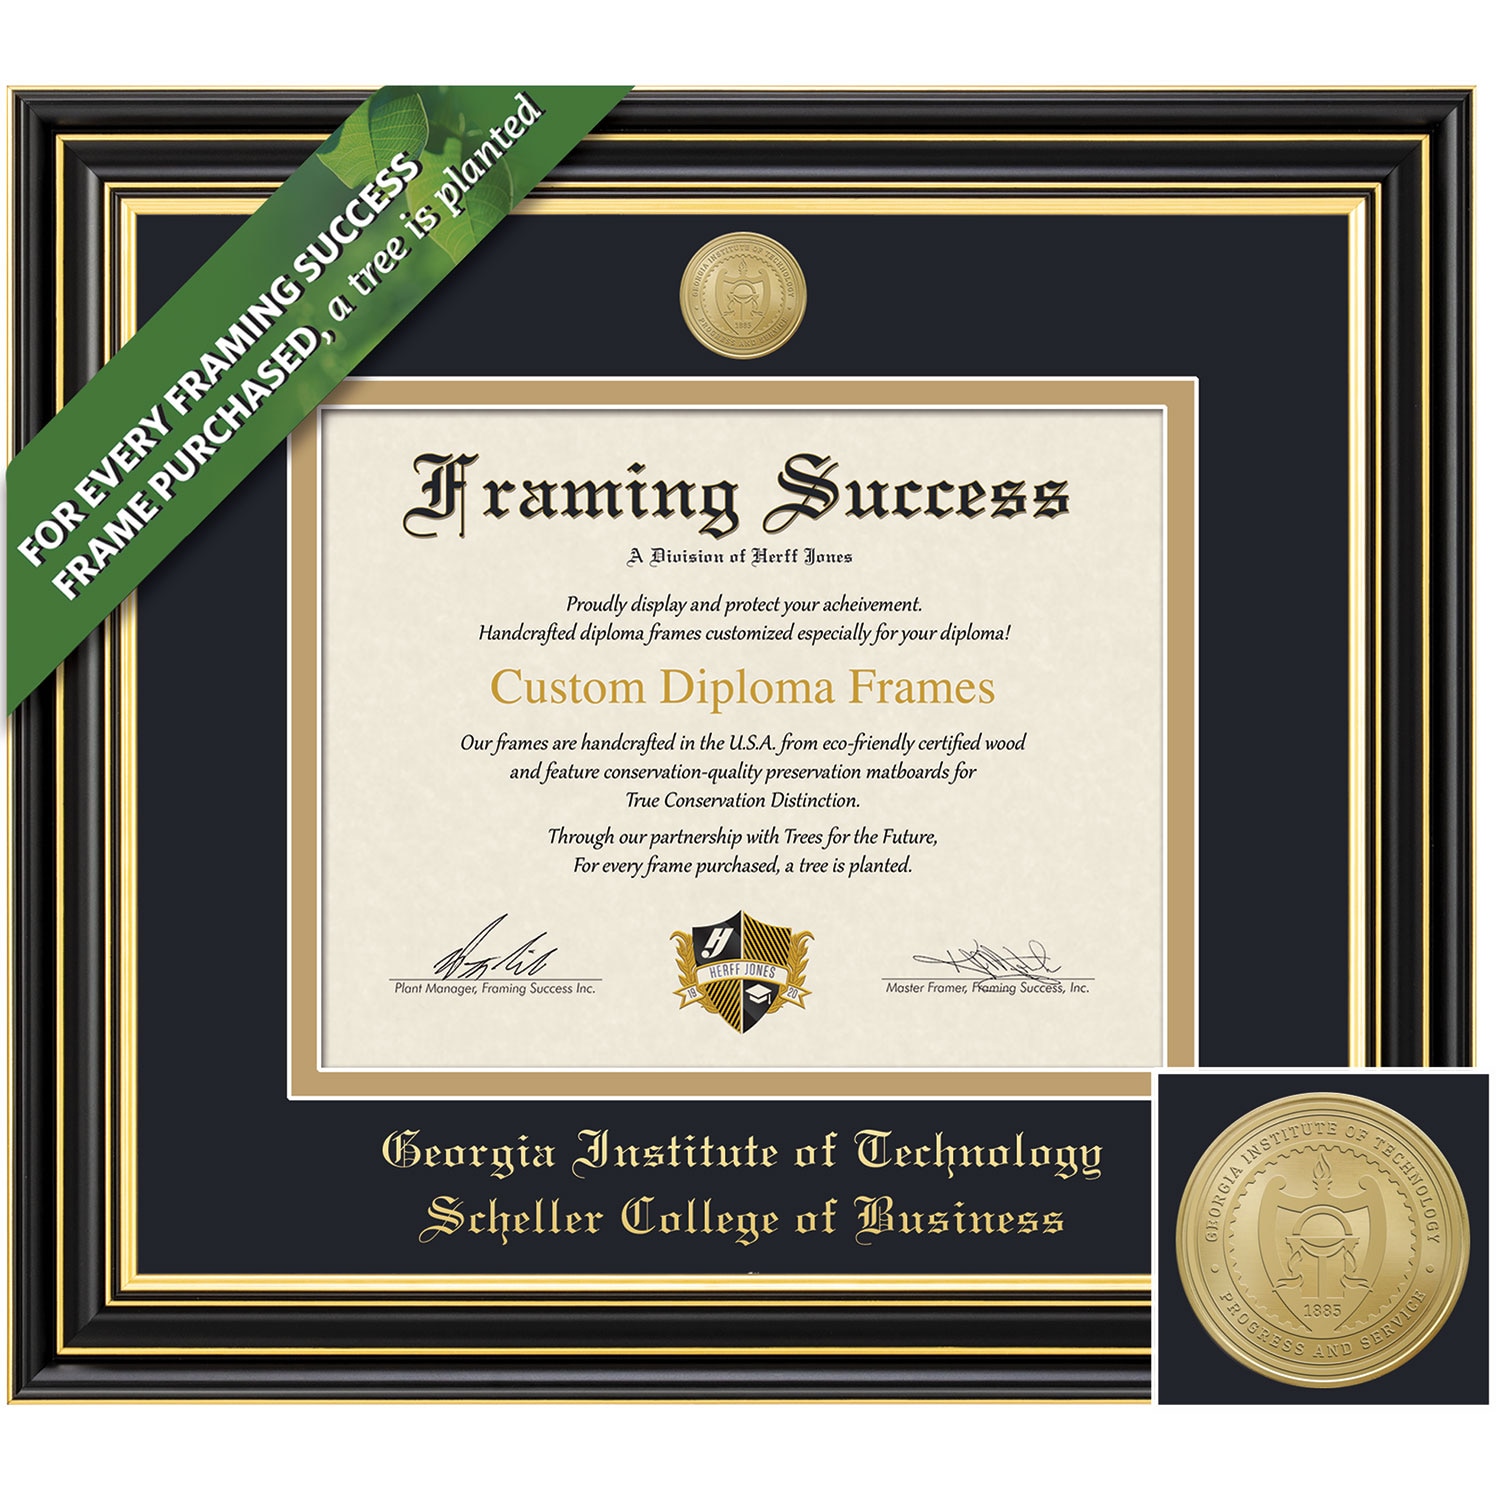 Framing Success 14 x 17 Prestige Gold Medallion Business Diploma Frame